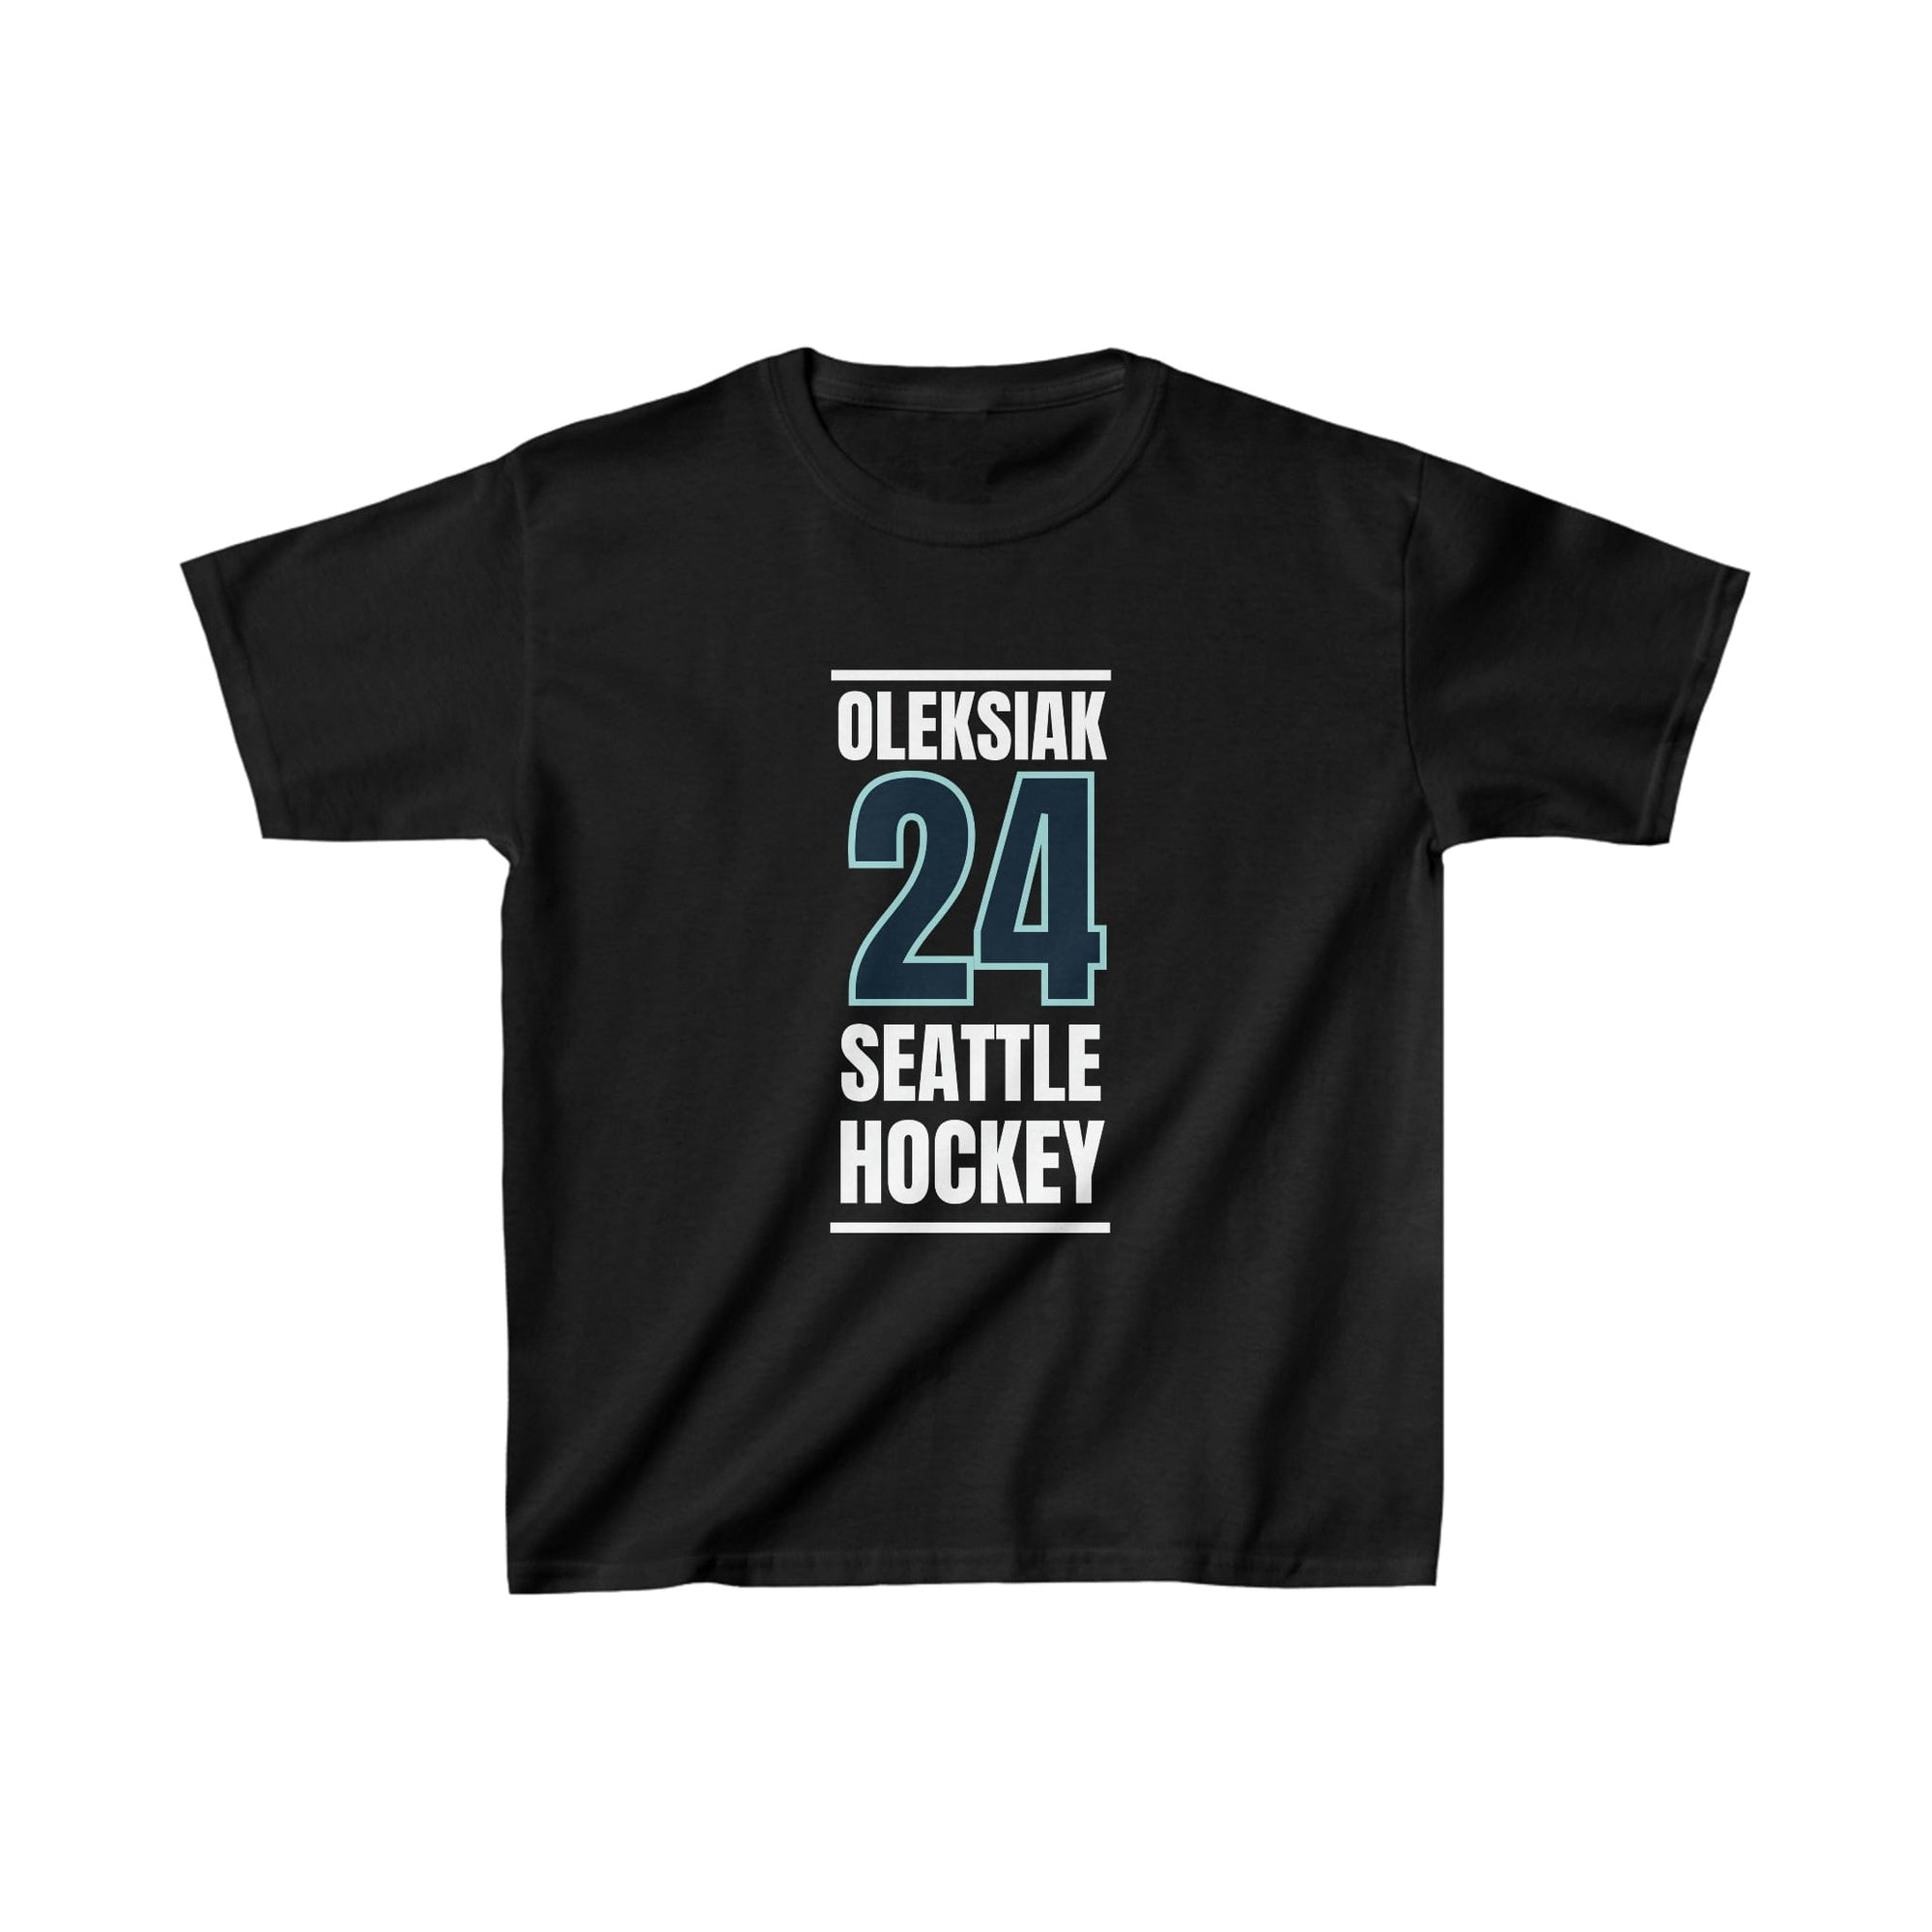 Kids clothes Oleksiak 24 Seattle Hockey Black Vertical Design Kids Tee